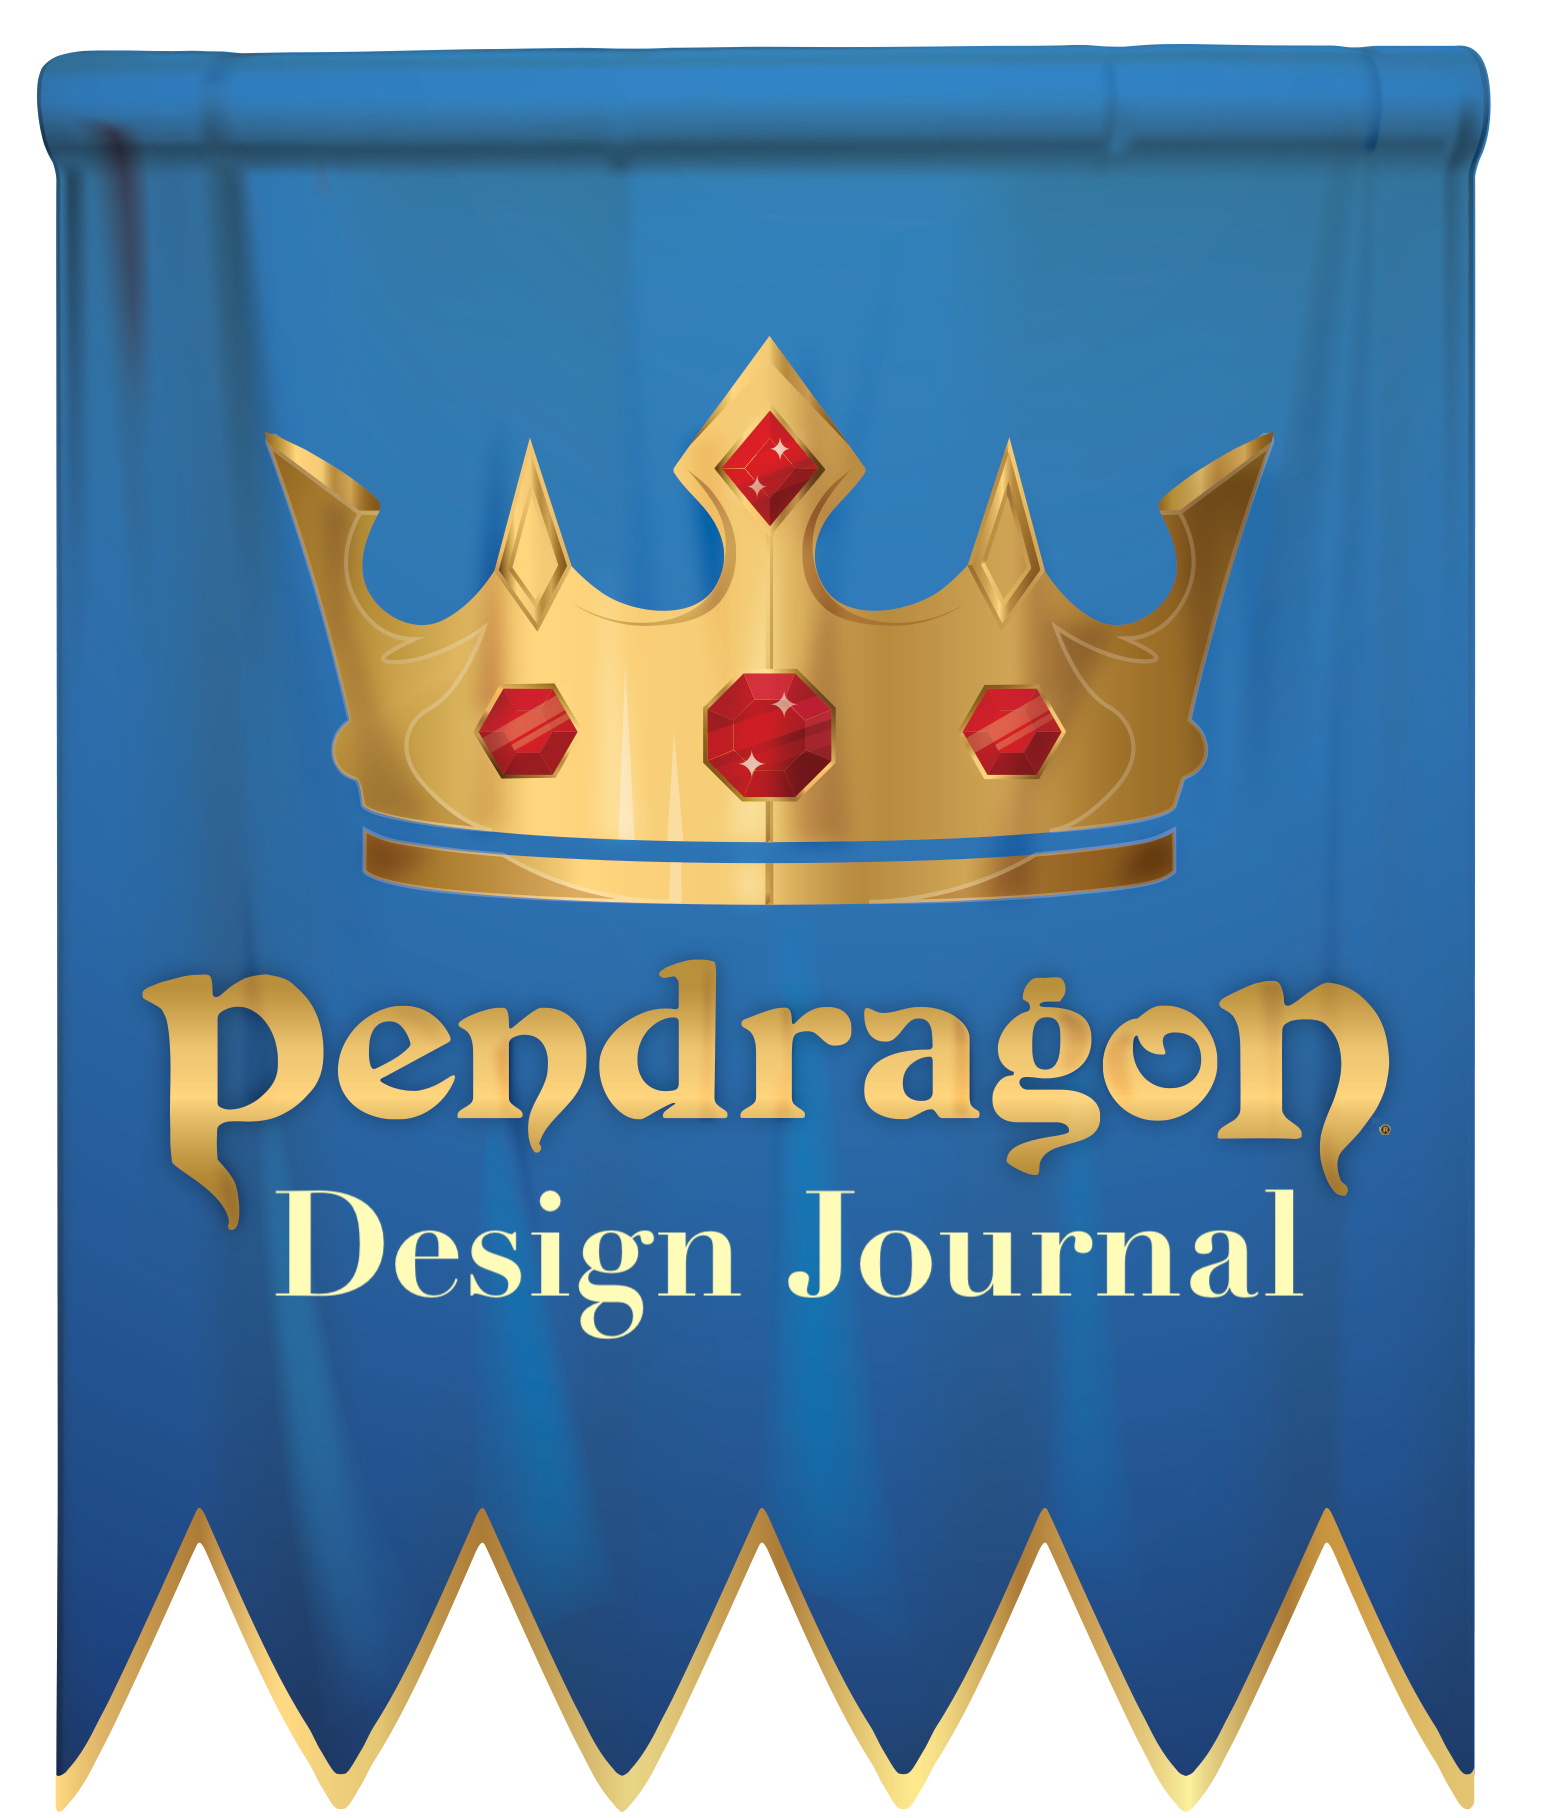 king arthur pendragon rpg 5th edition explained